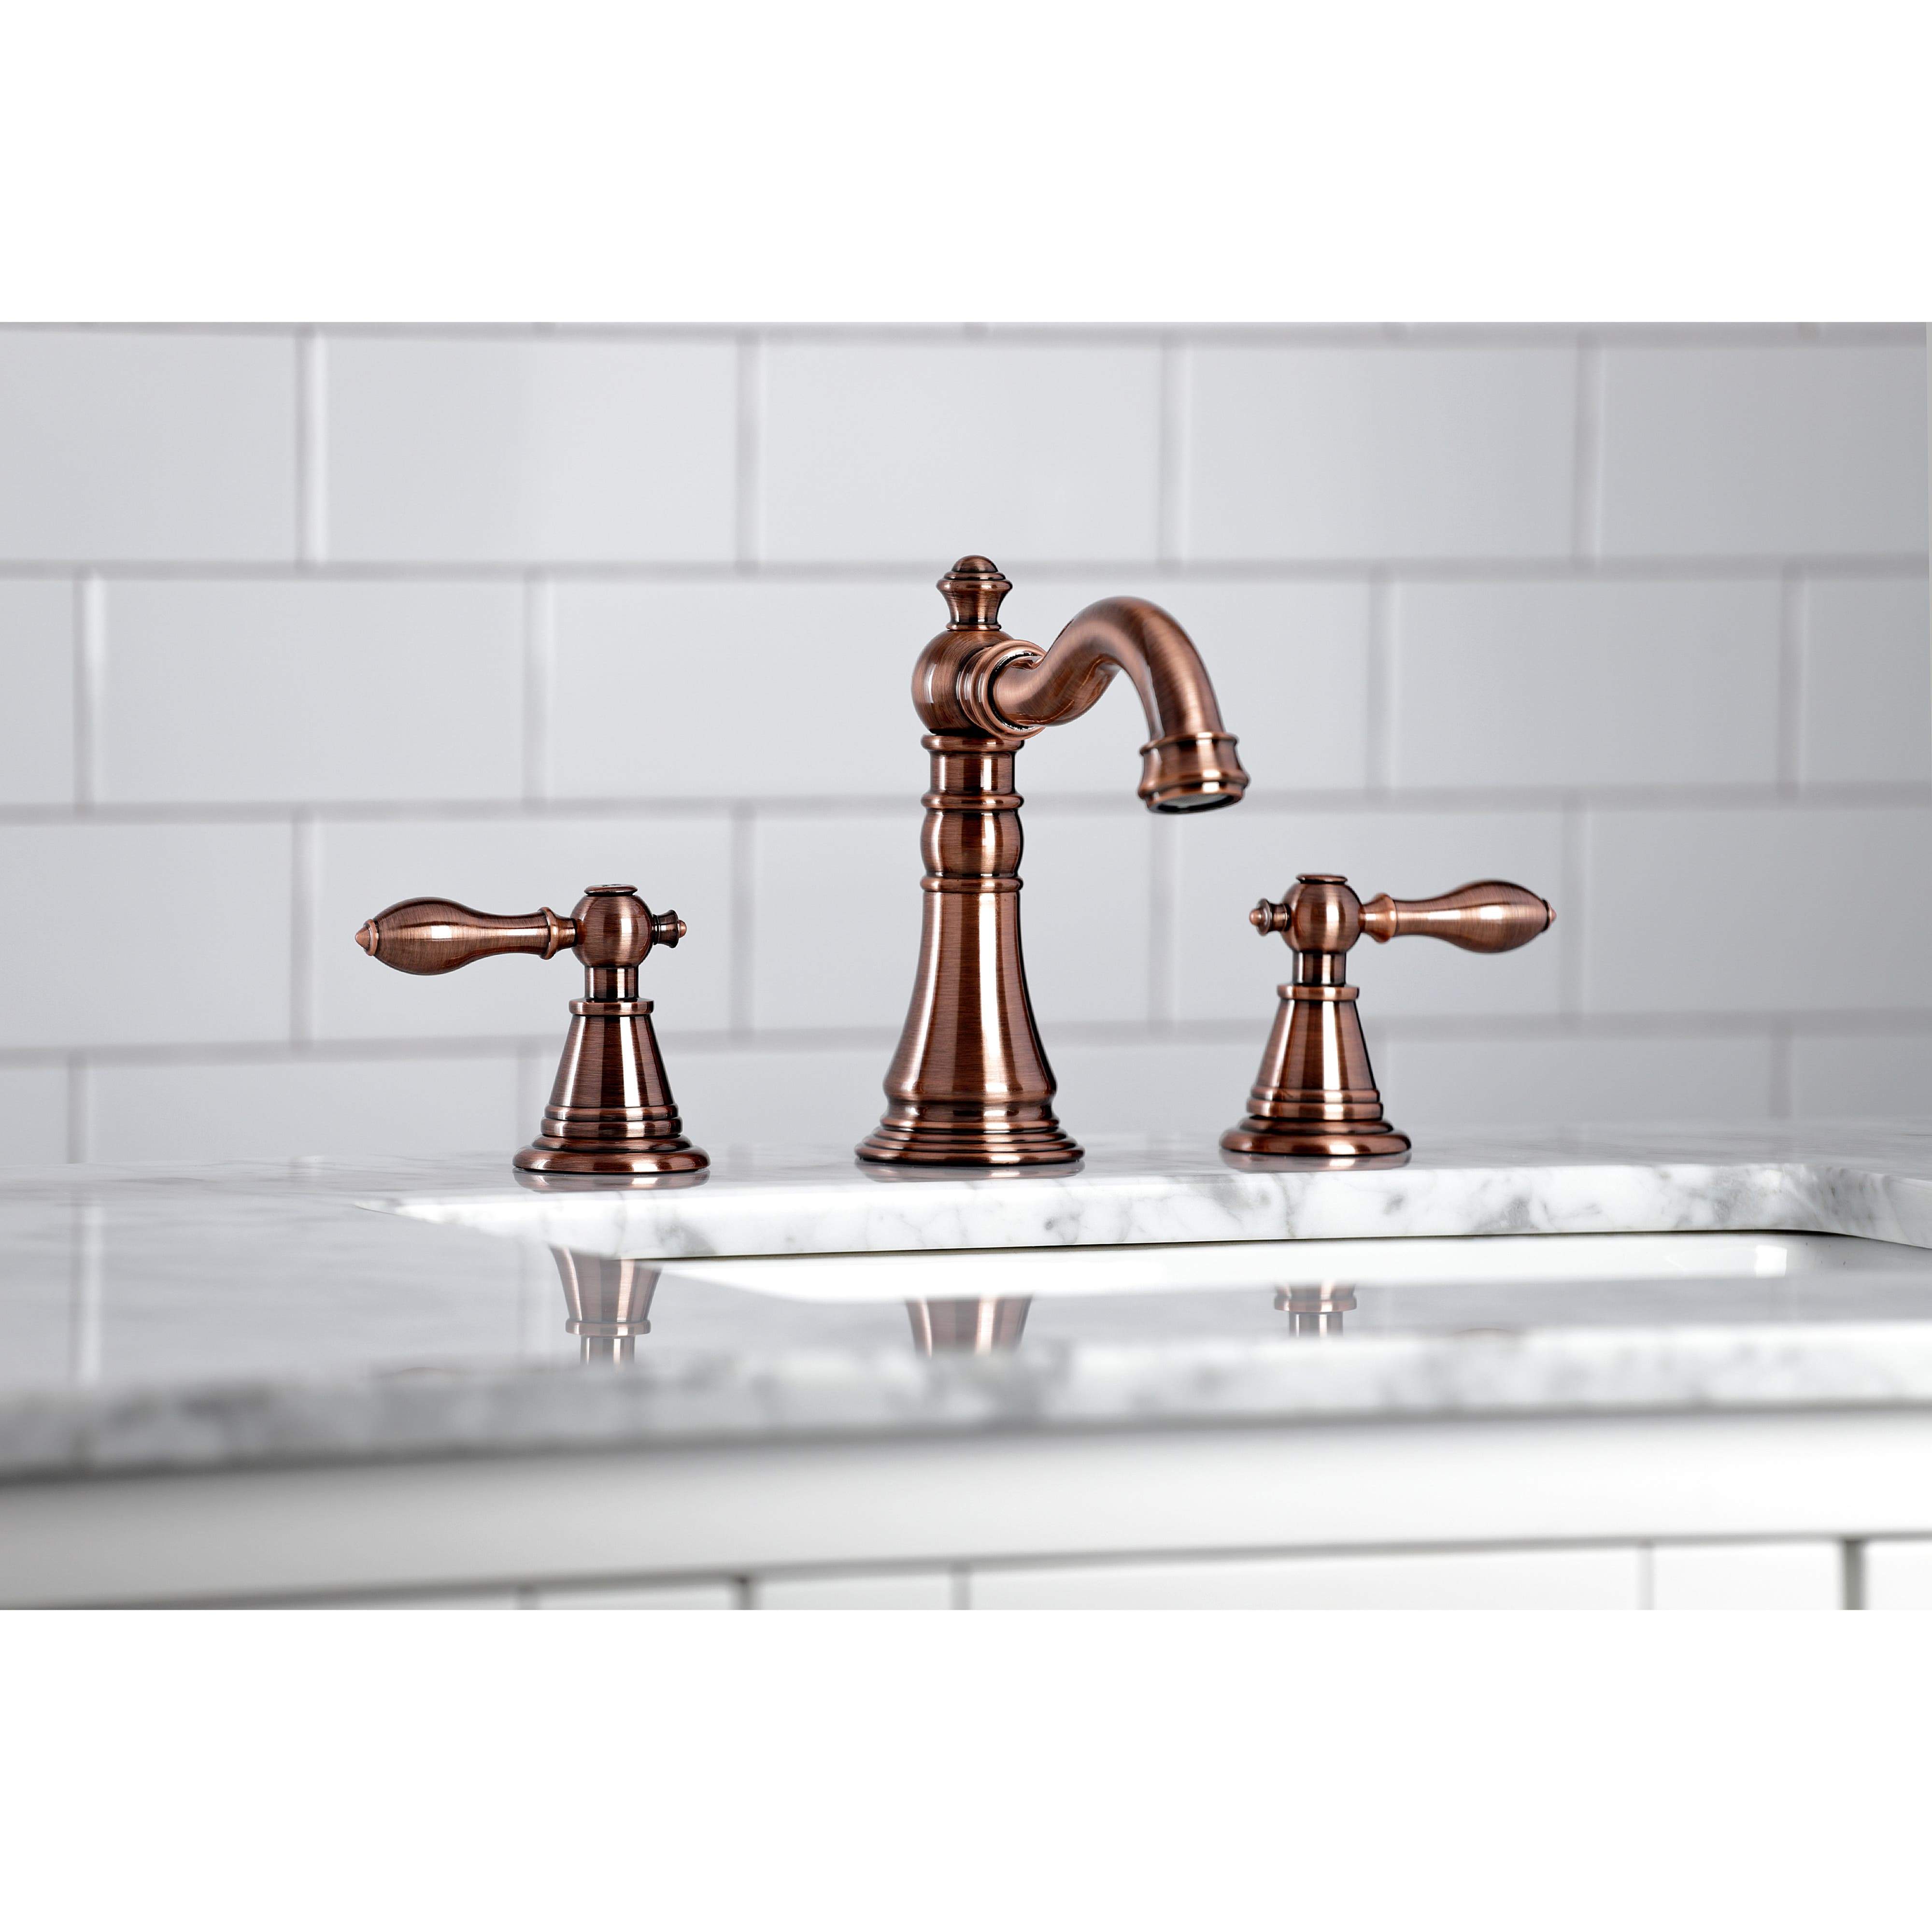 Kingston Brass Fauceture FSC197ALAC English Classic Widespread Bathroom Faucet, Antique Copper